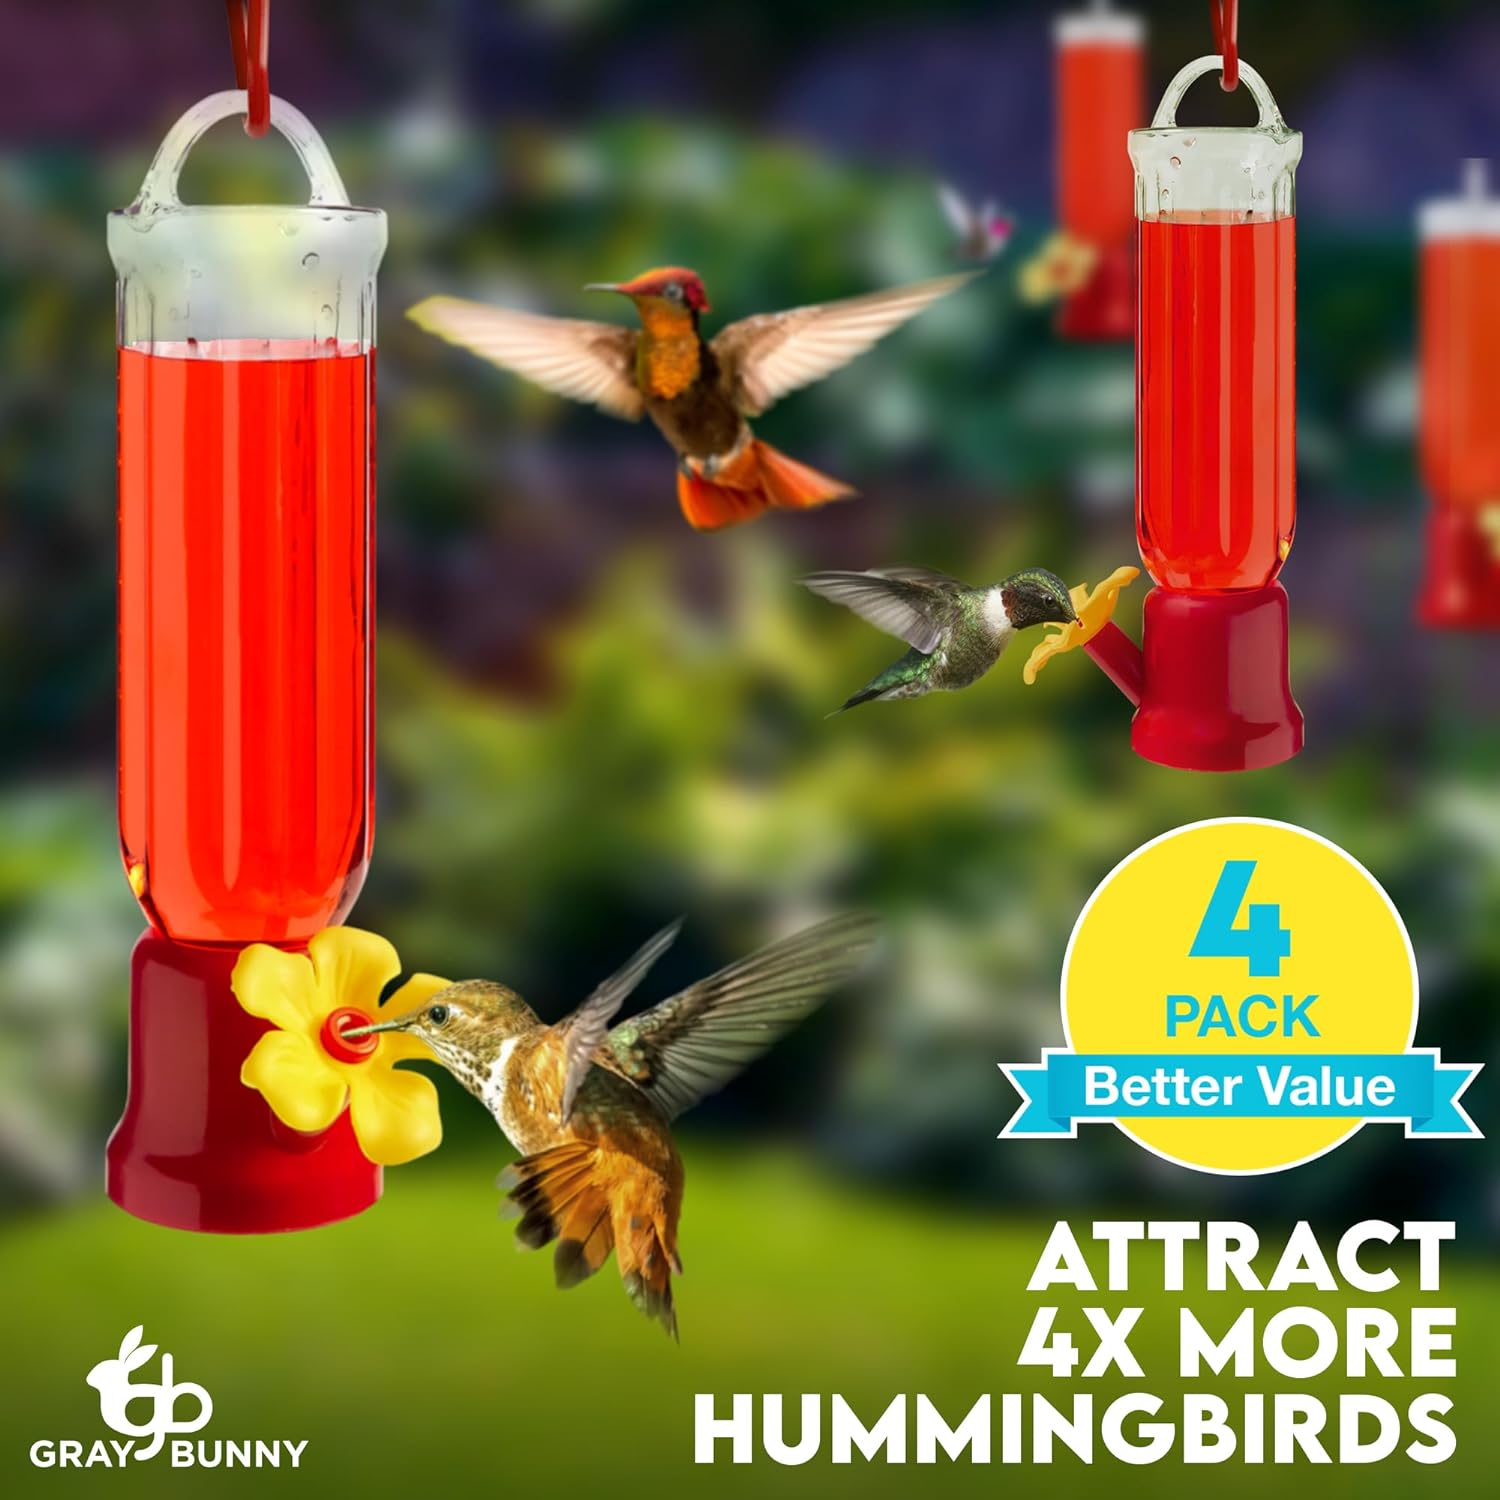 Gray Bunny Hummingbird Feeders for Outdoors Hanging, 2.3 oz Each [Set of 4], Small Hummingbird Feeder Plastic with Hanging Wires, Hummingbird Feeder Stand, Humming Bird Feeder, New Leak-Proof Desing